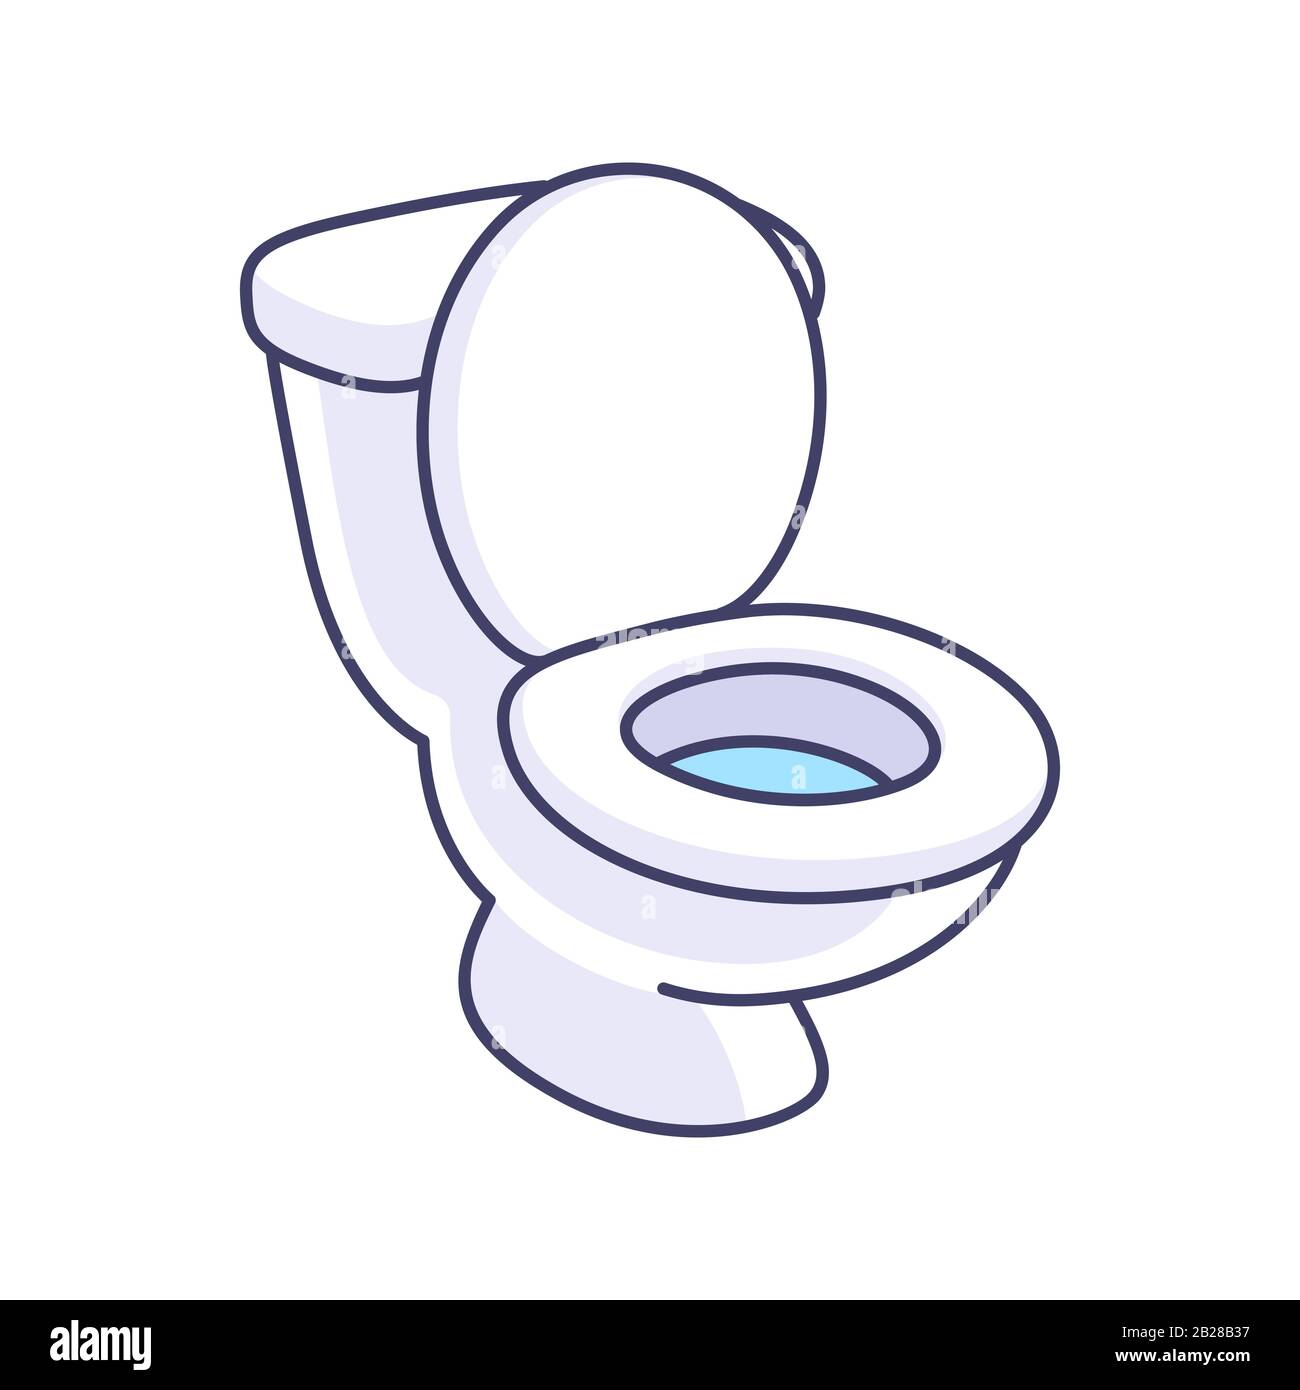  Dessin  de dessin  de dessin  anim  de cuvette de toilettes 